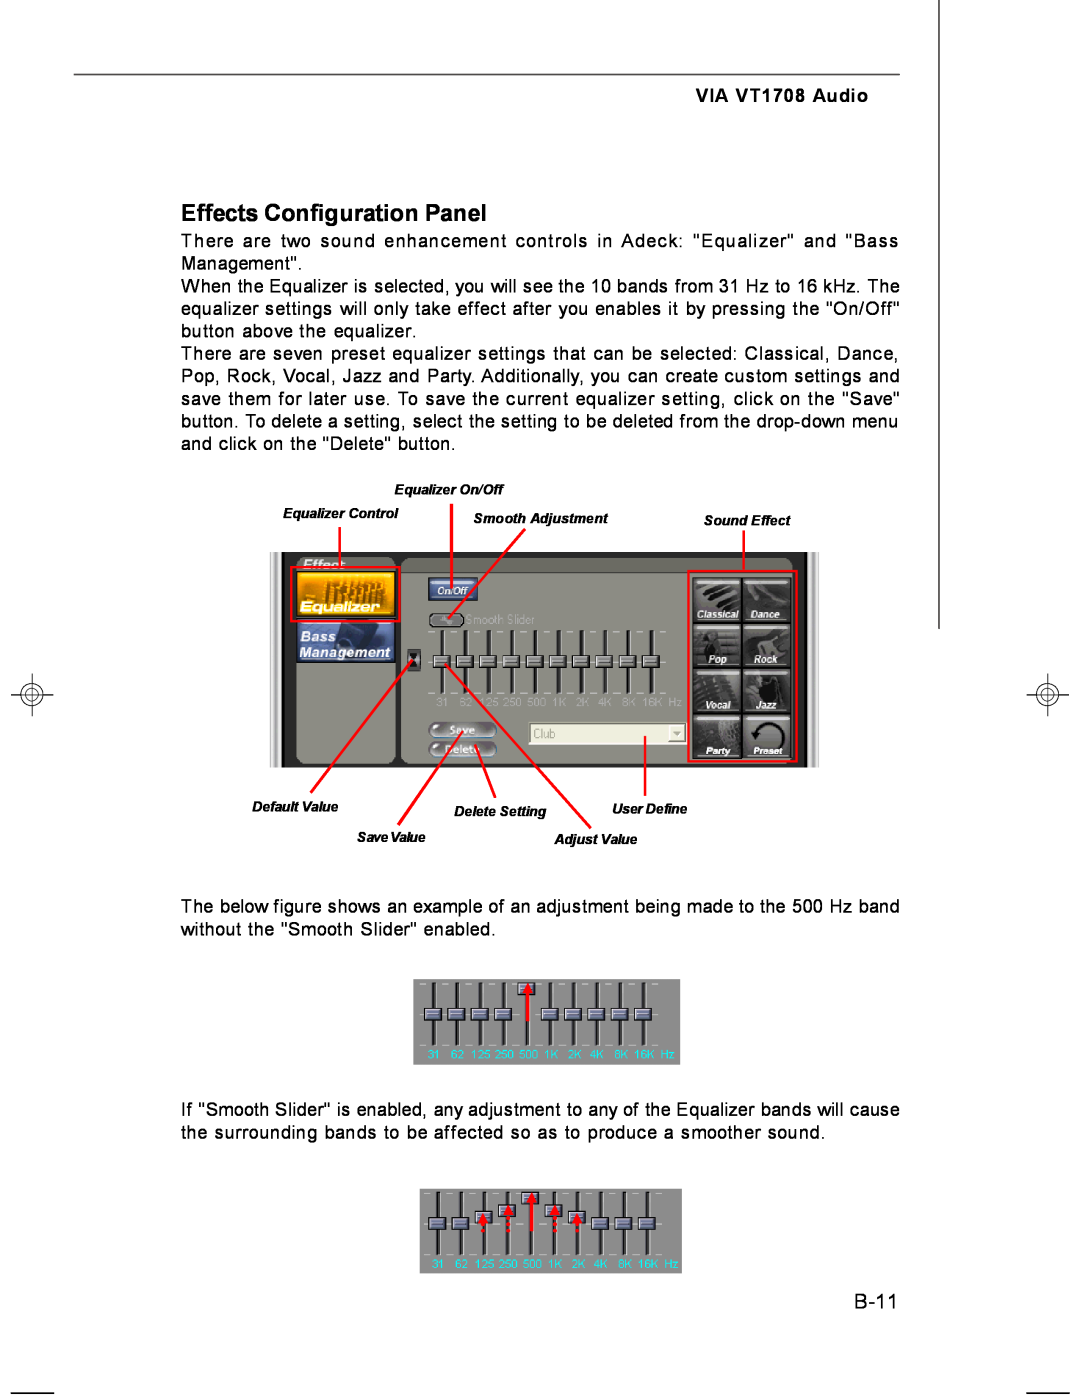 MSI MS-7255 manual Effects Configuration Panel, B-11, VIA VT1708 Audio 